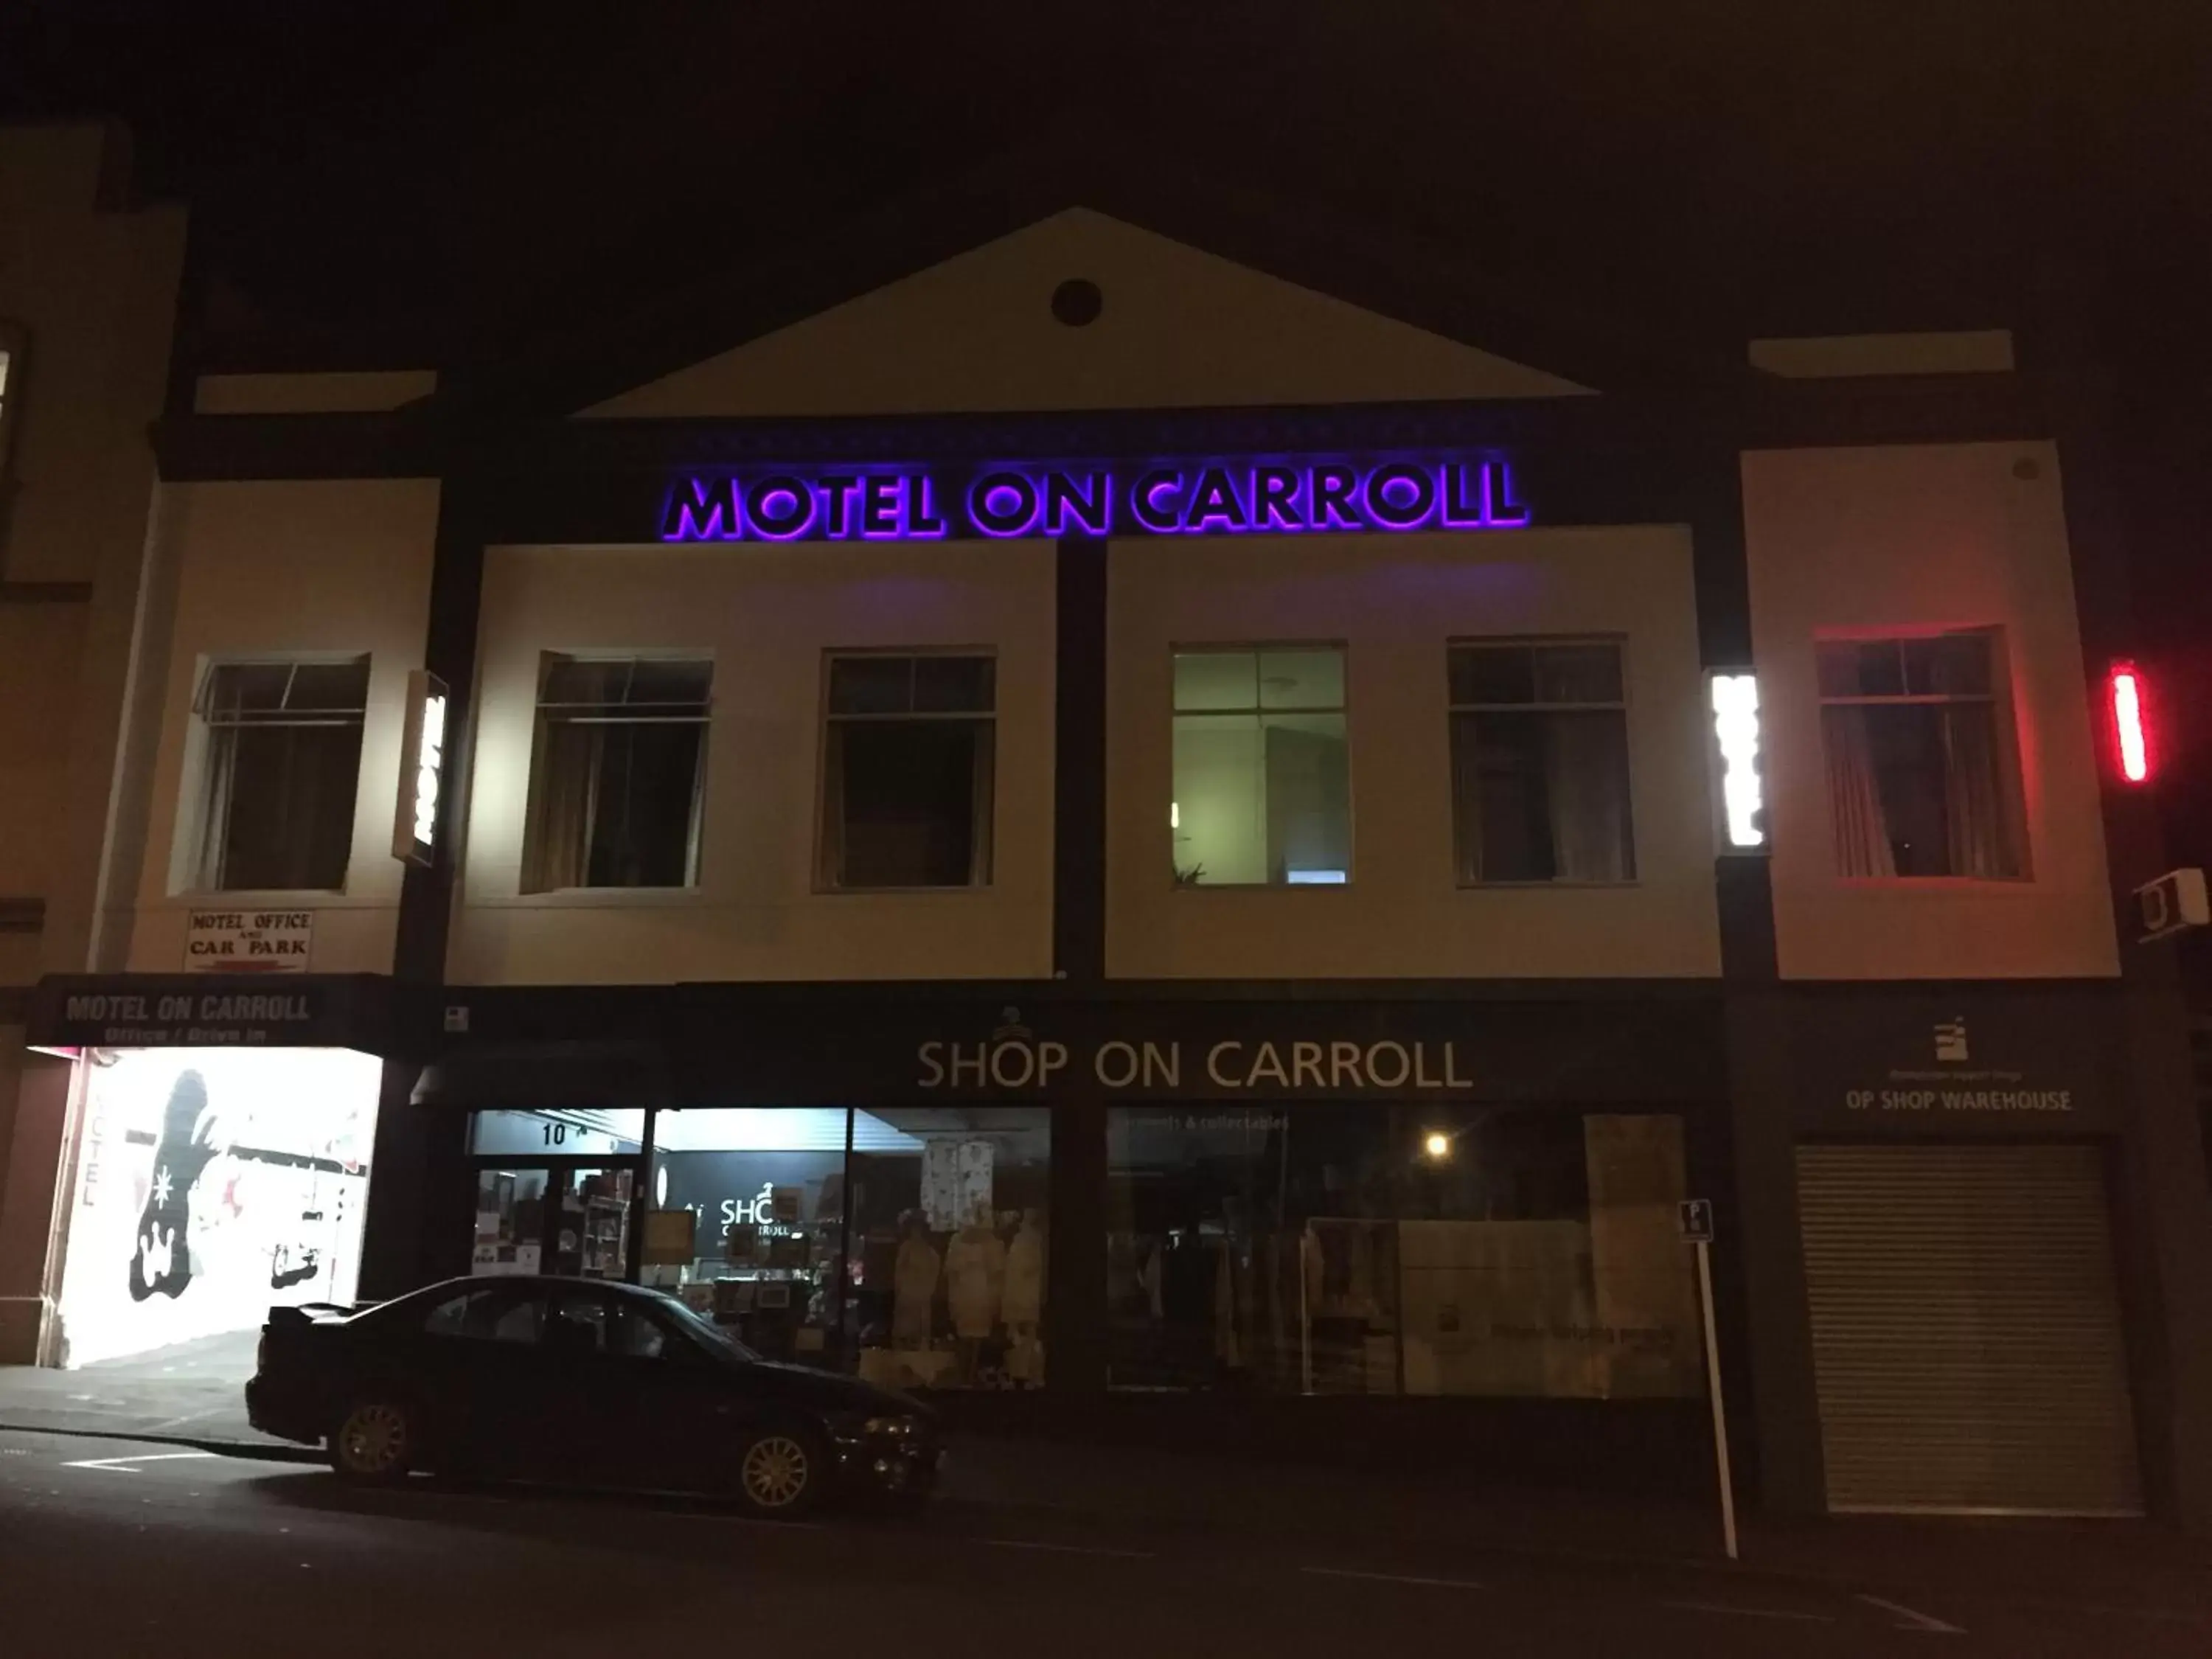 Facade/Entrance in Motel on Carroll